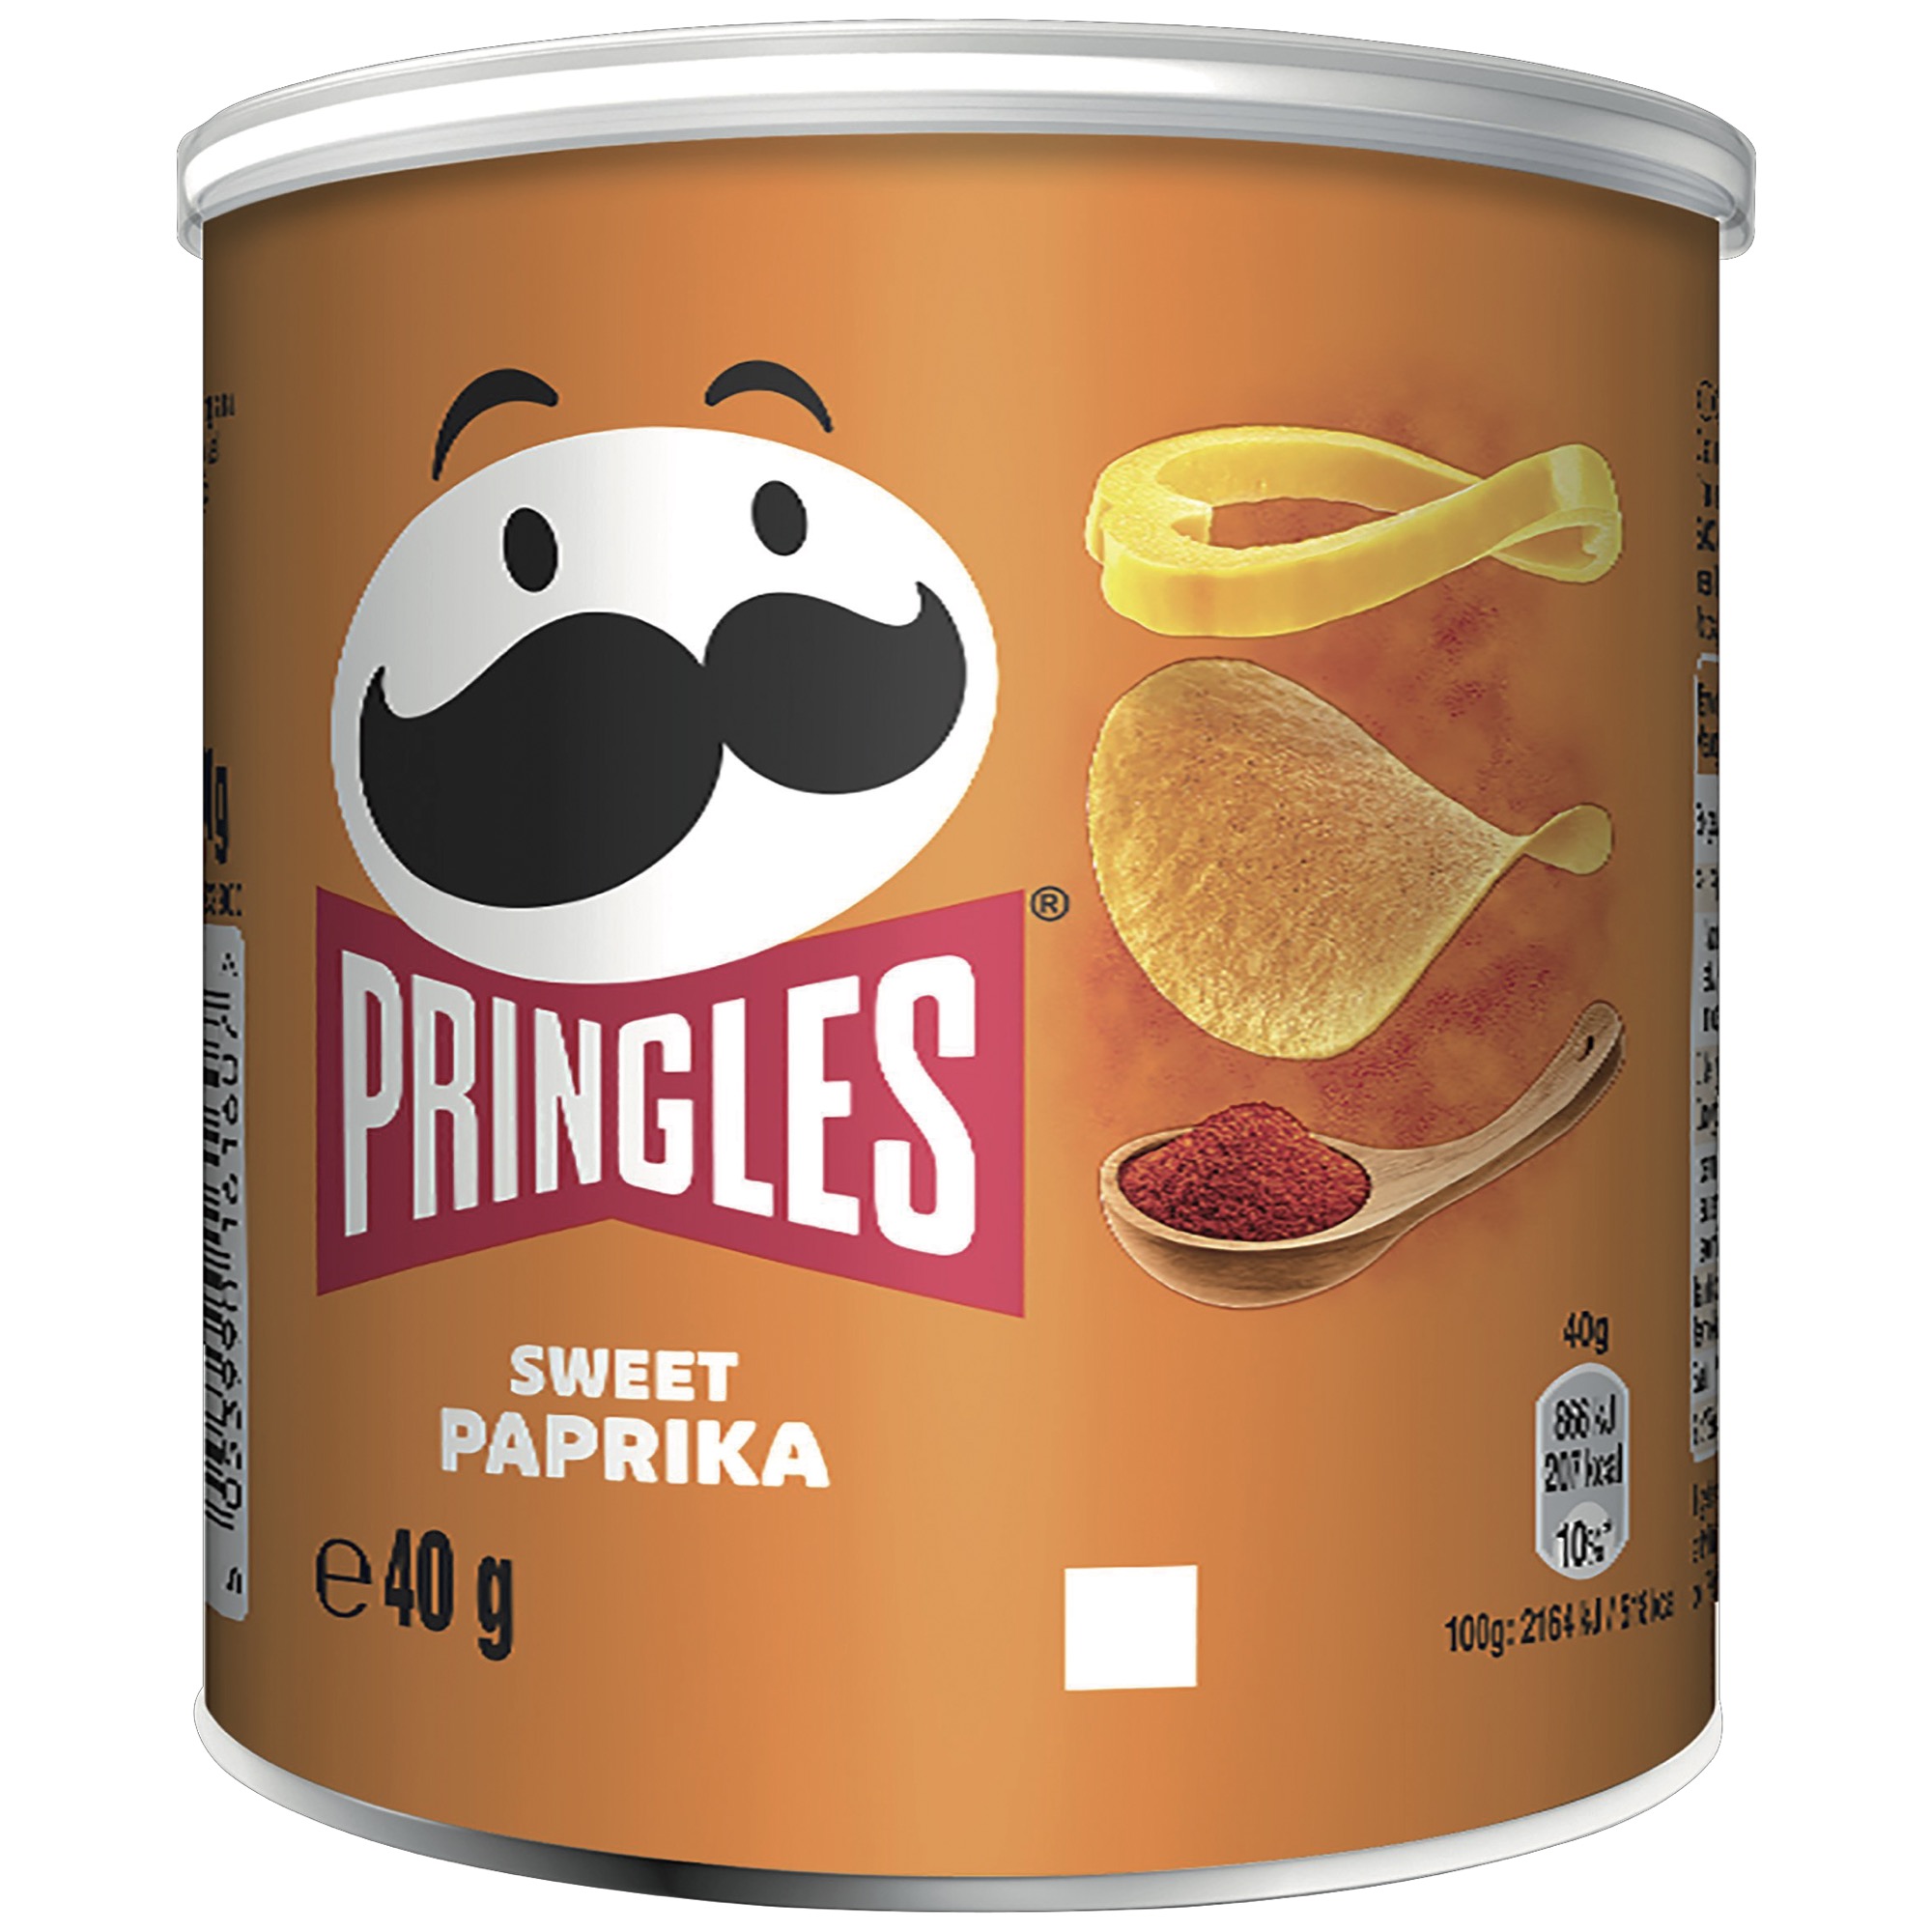 Pringles 40g, Sweet Paprika